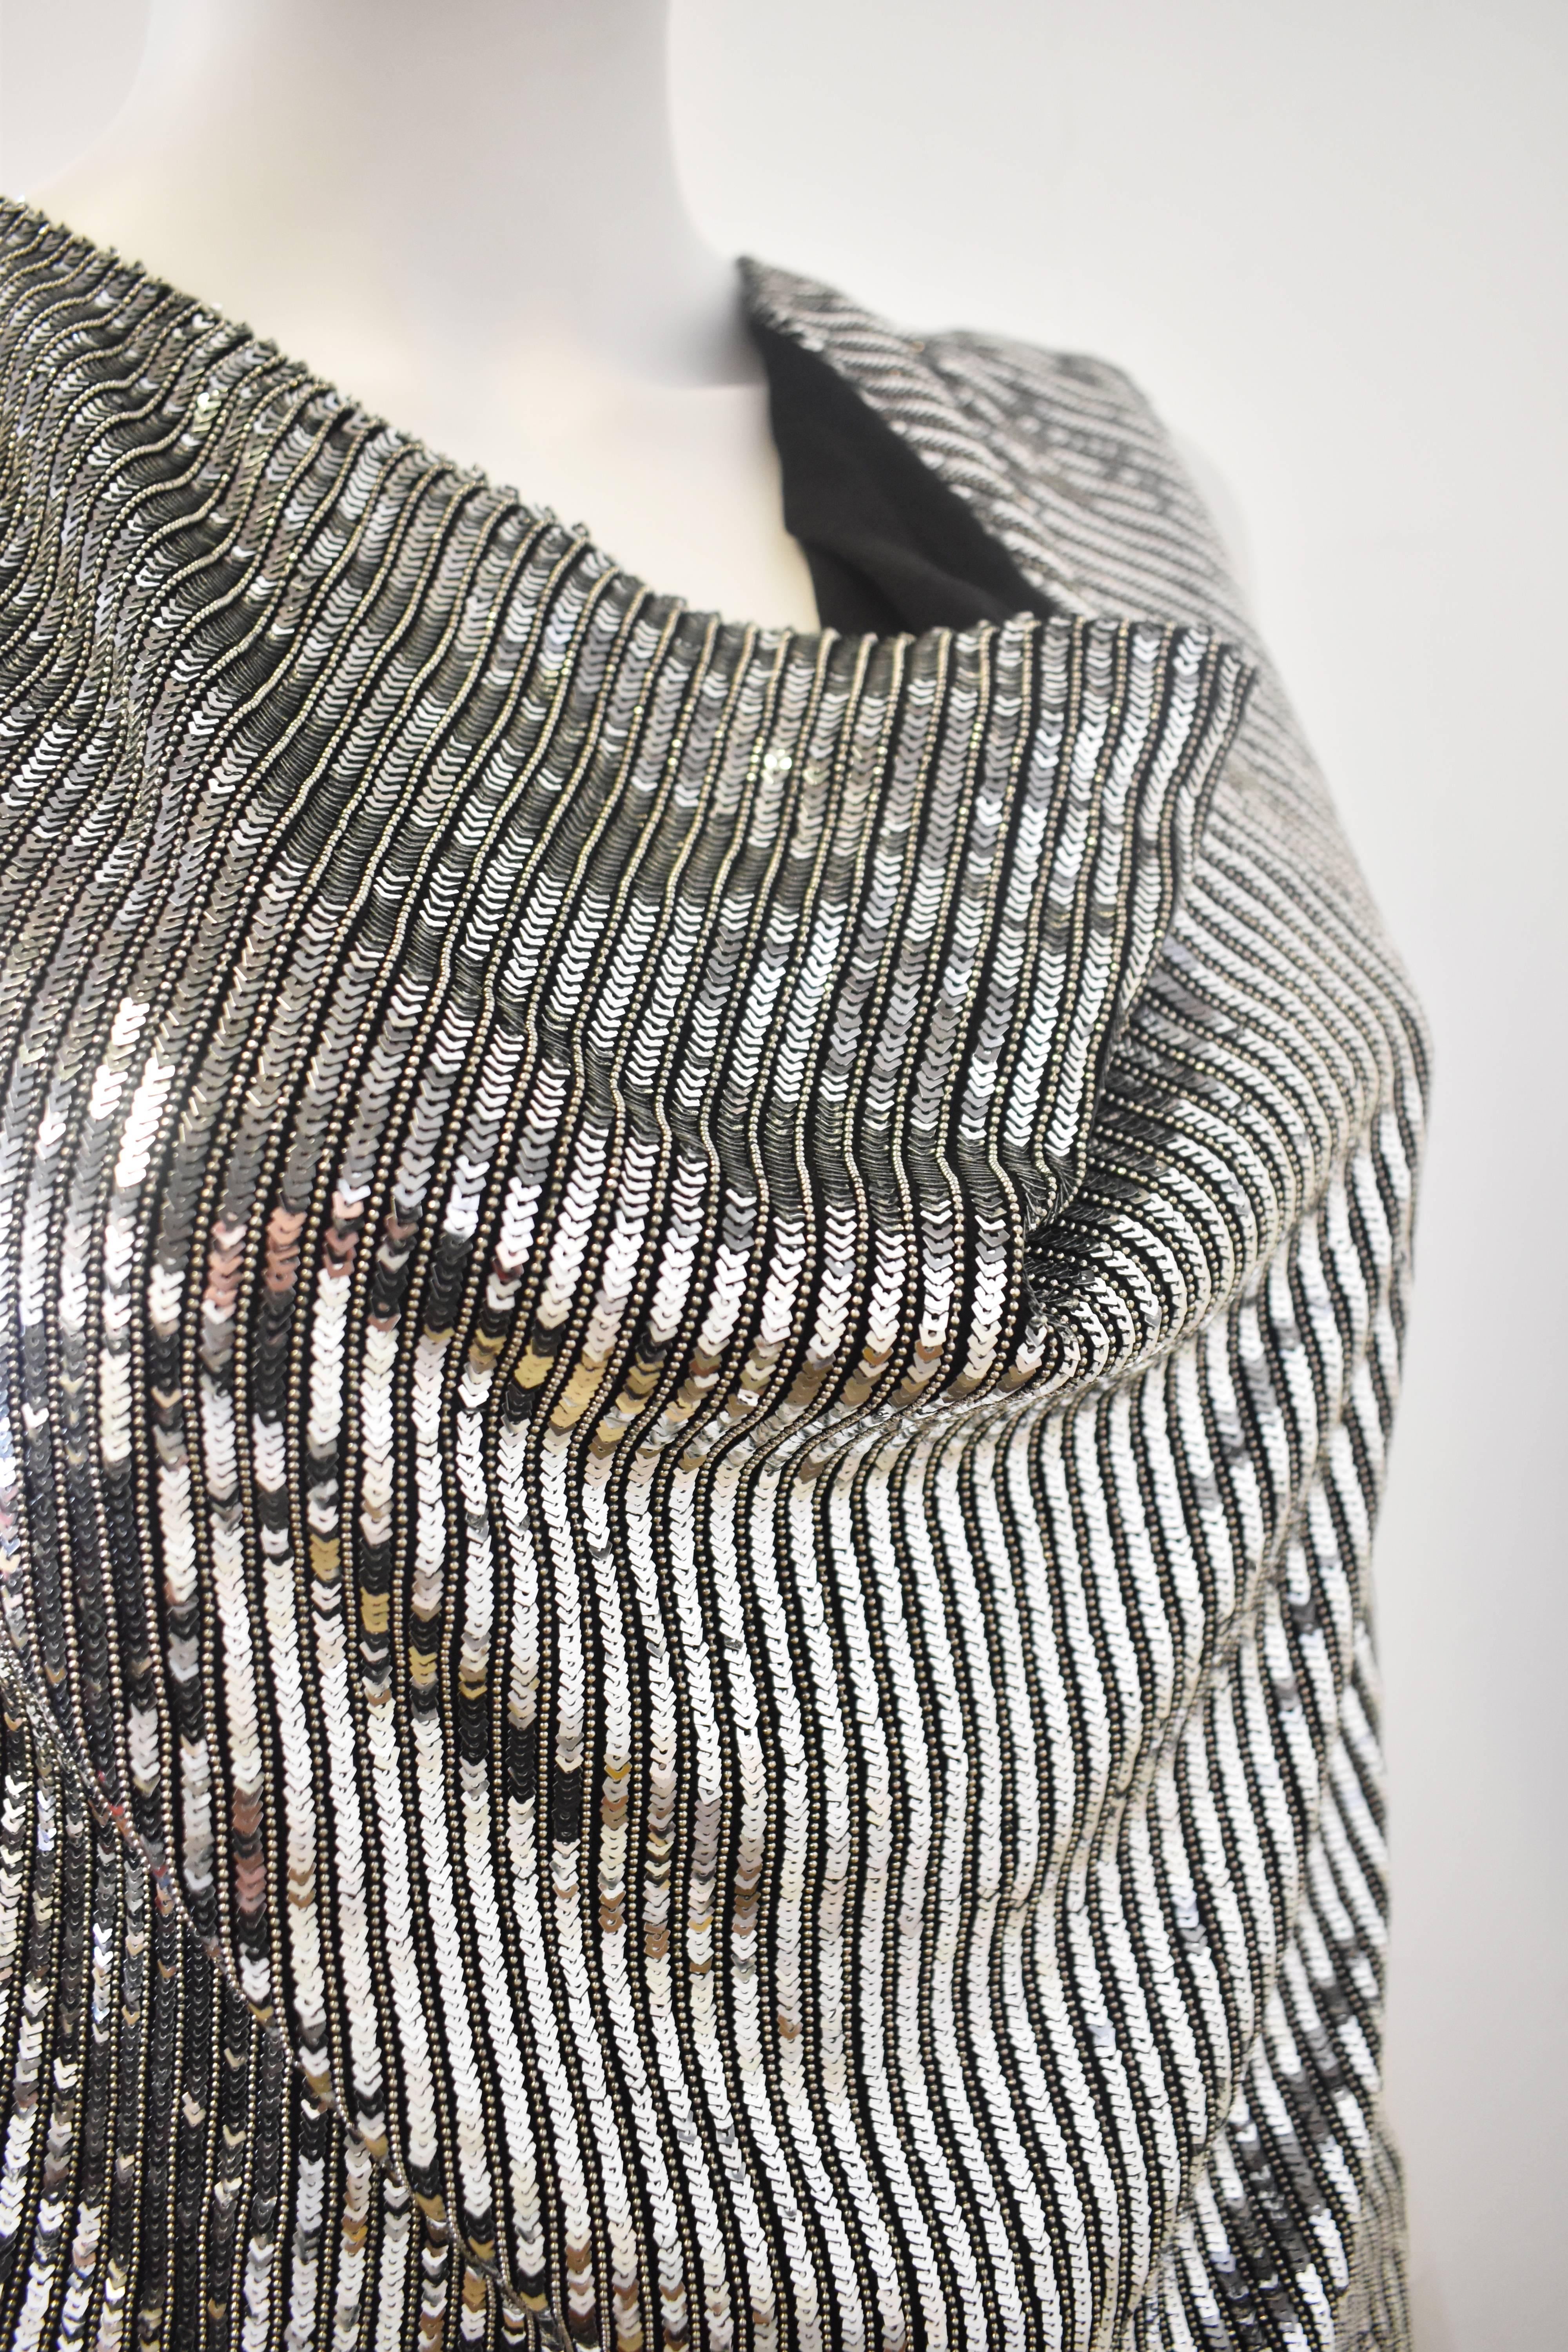 Saint Laurent Hedi Slimane Silver Silk Sequin and Beaded Mini Dress 2015 2